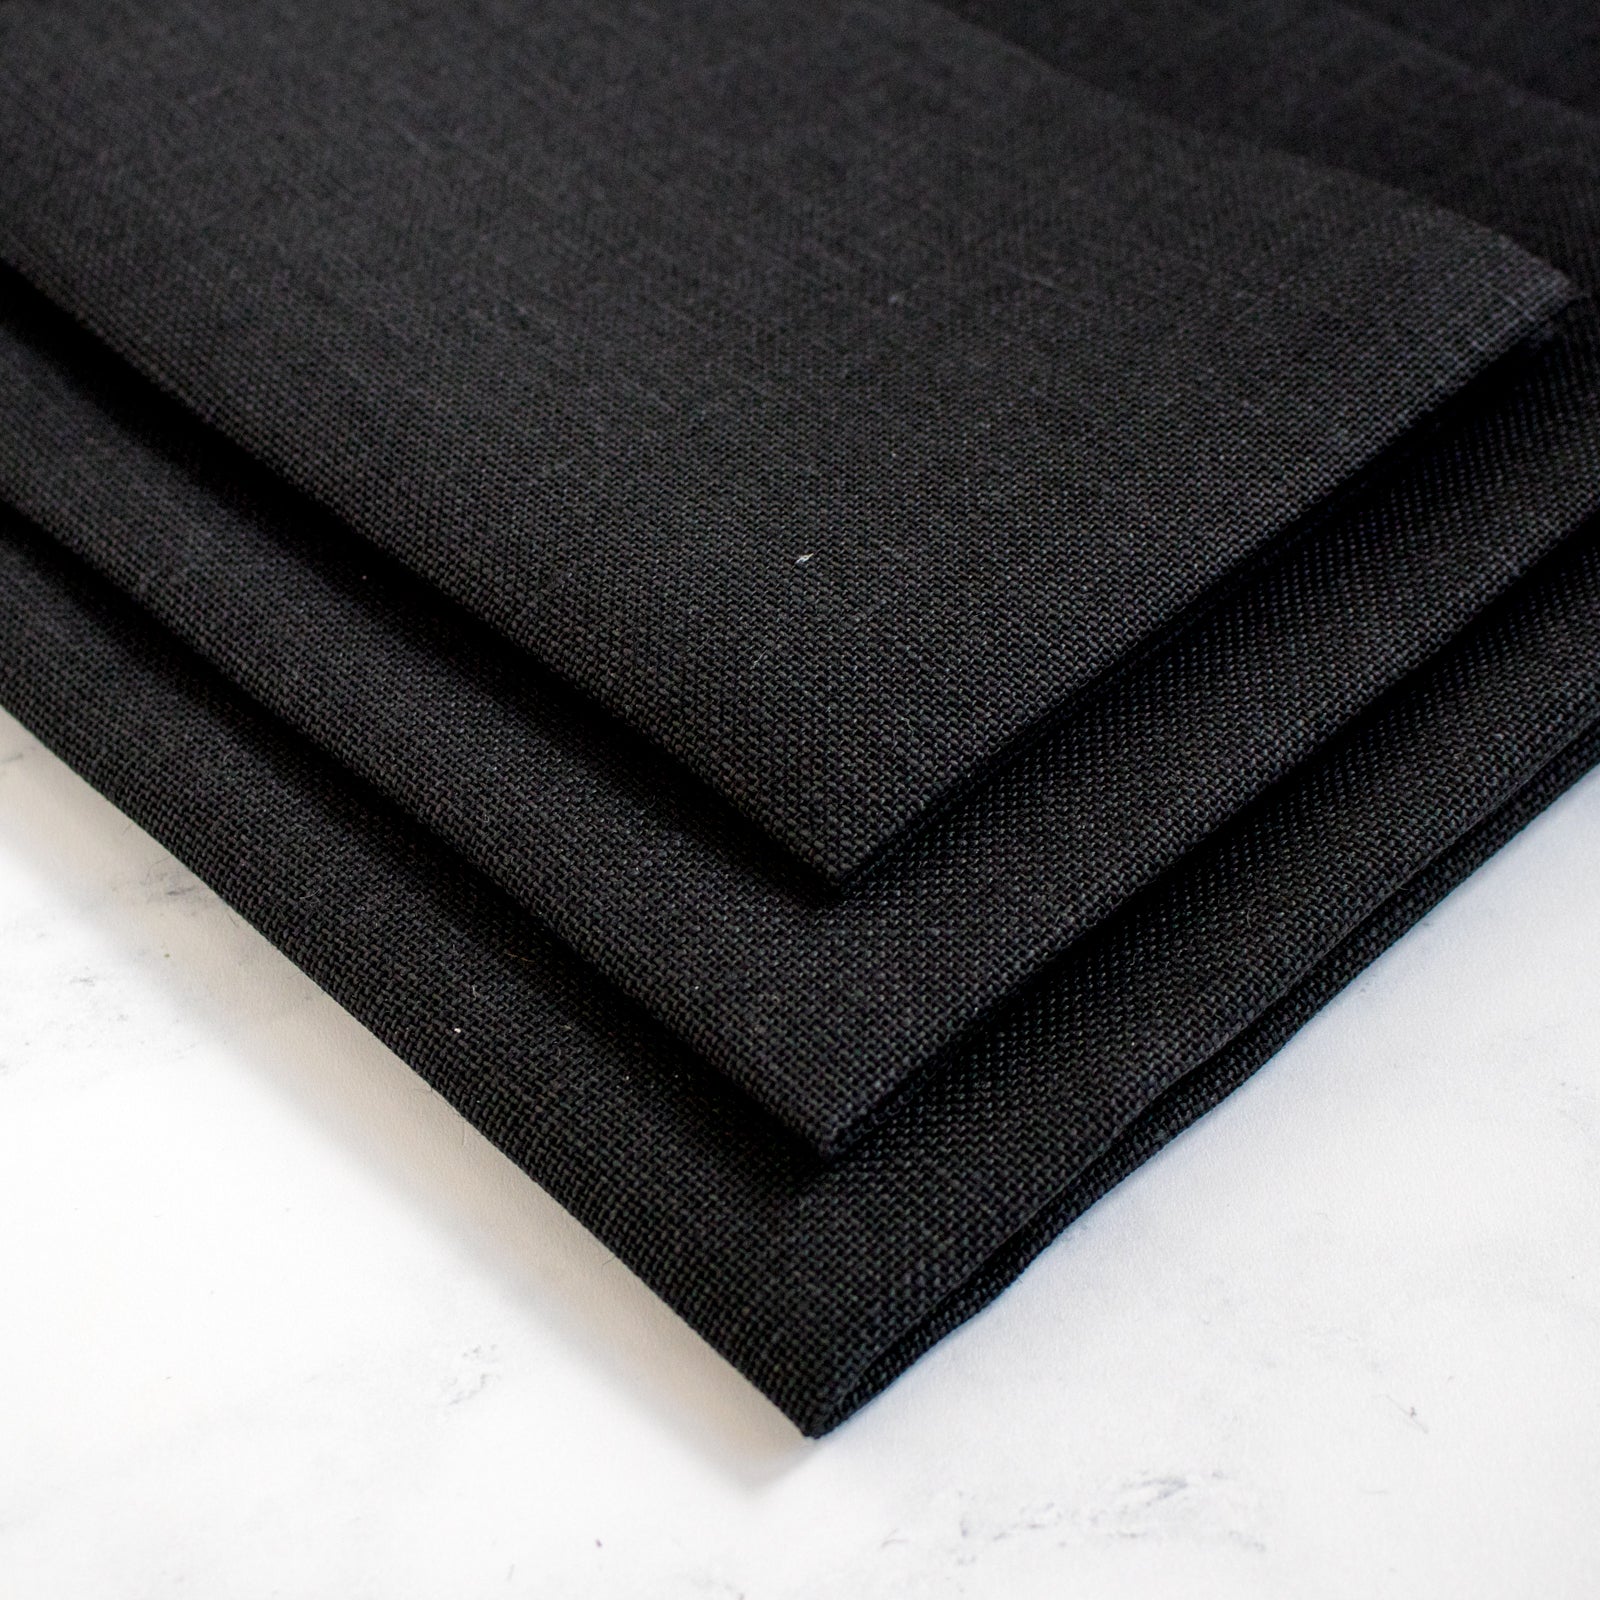 Chalkboard Black Linen Cross Stitch Fabric - 32 count - Stitched Modern